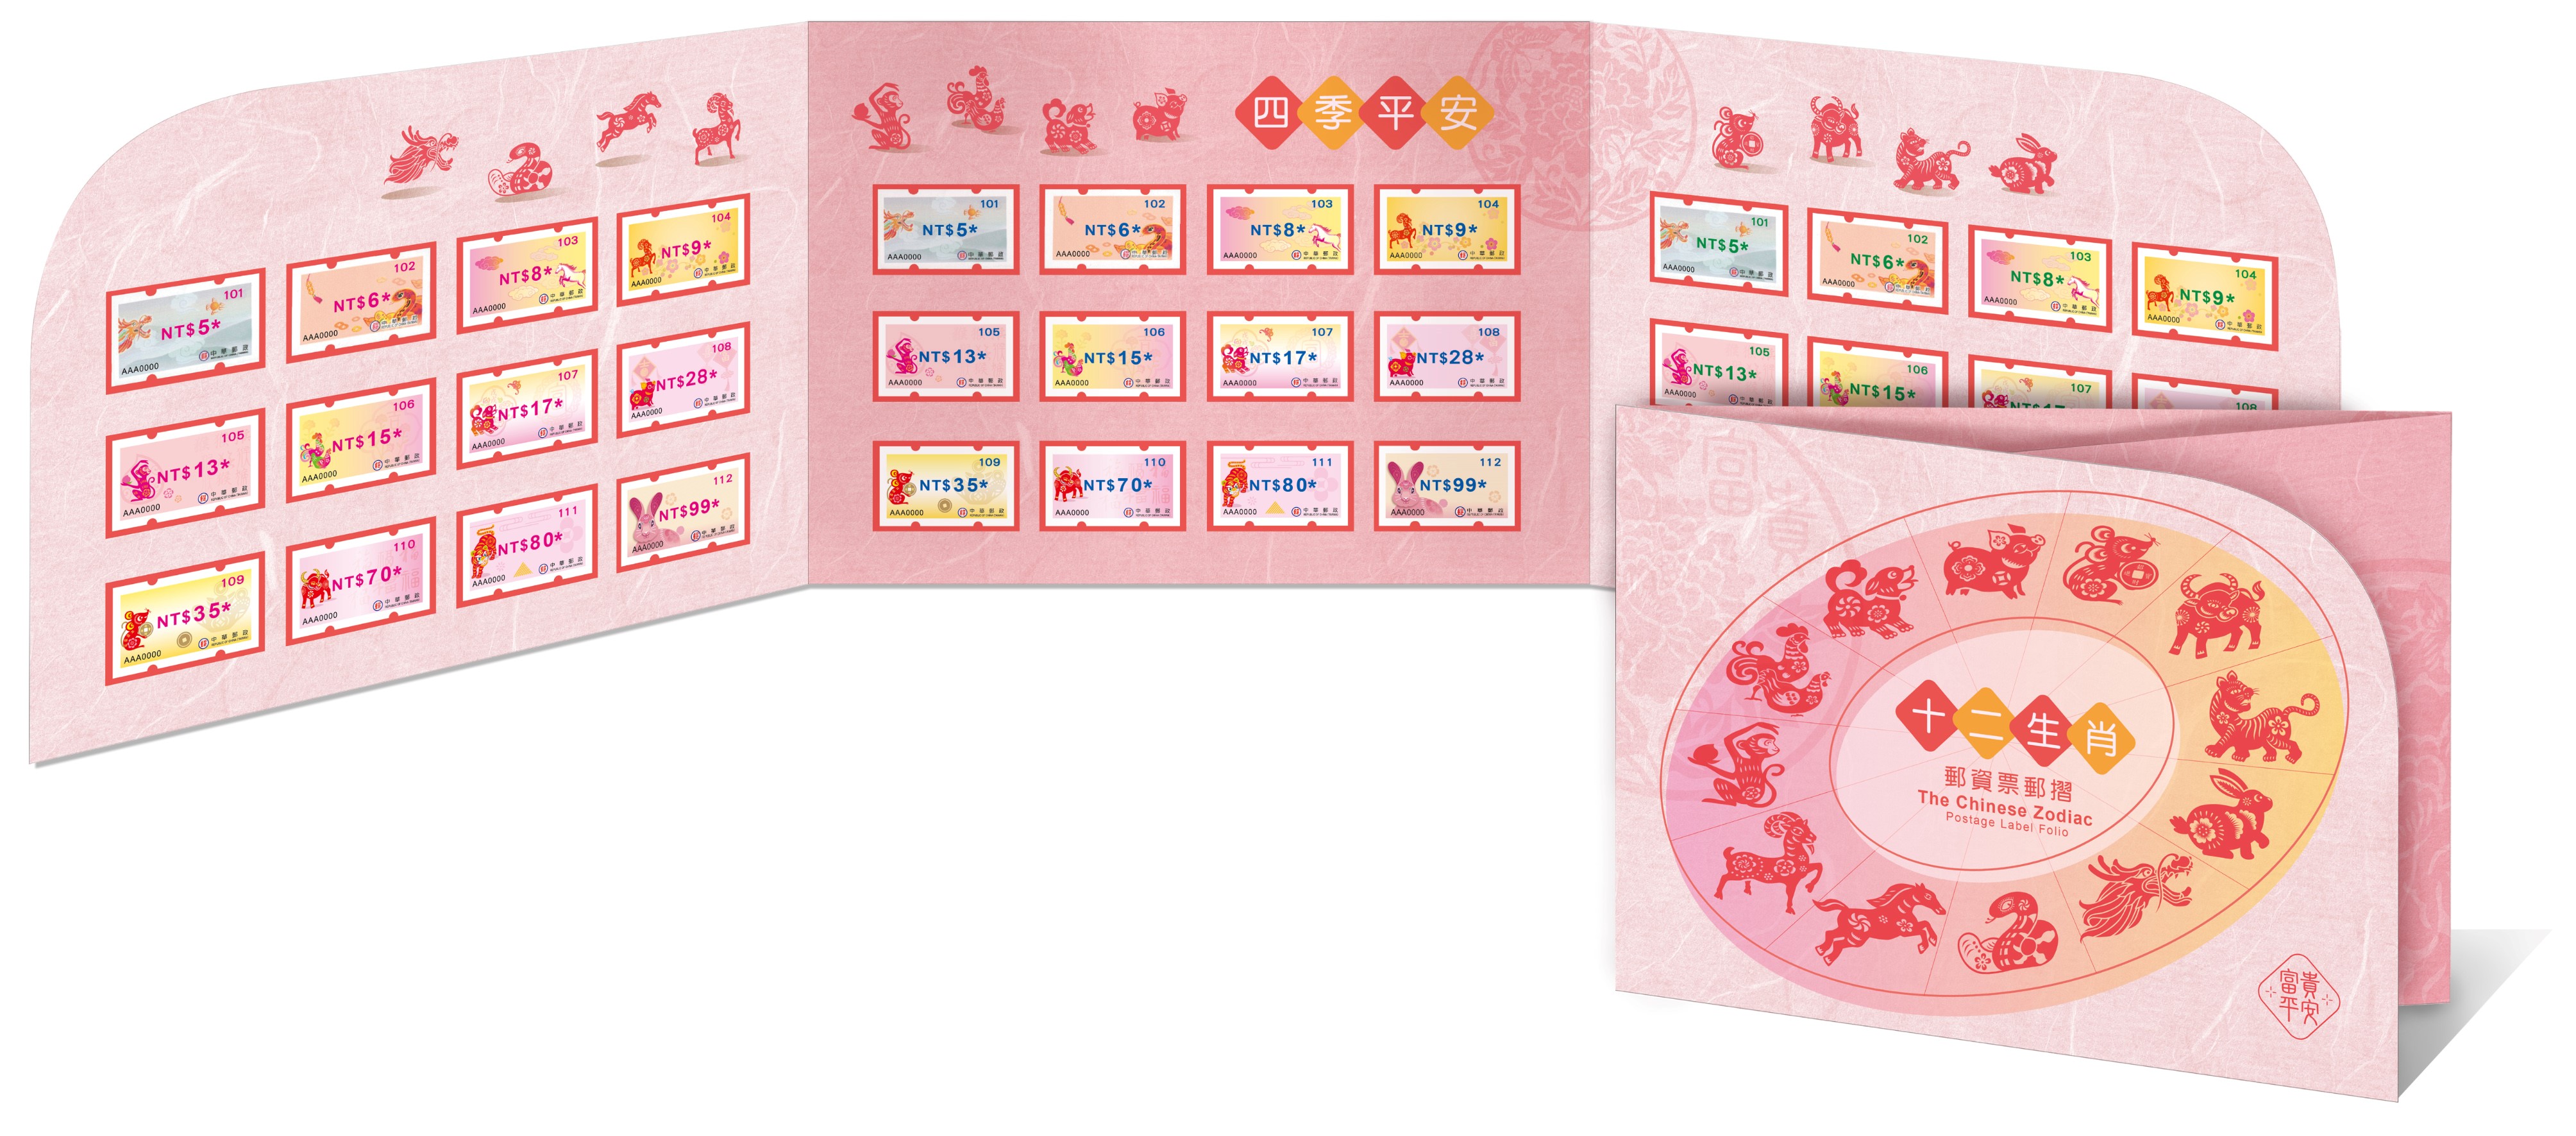 The Chinese Zodiac Postage Label Folio